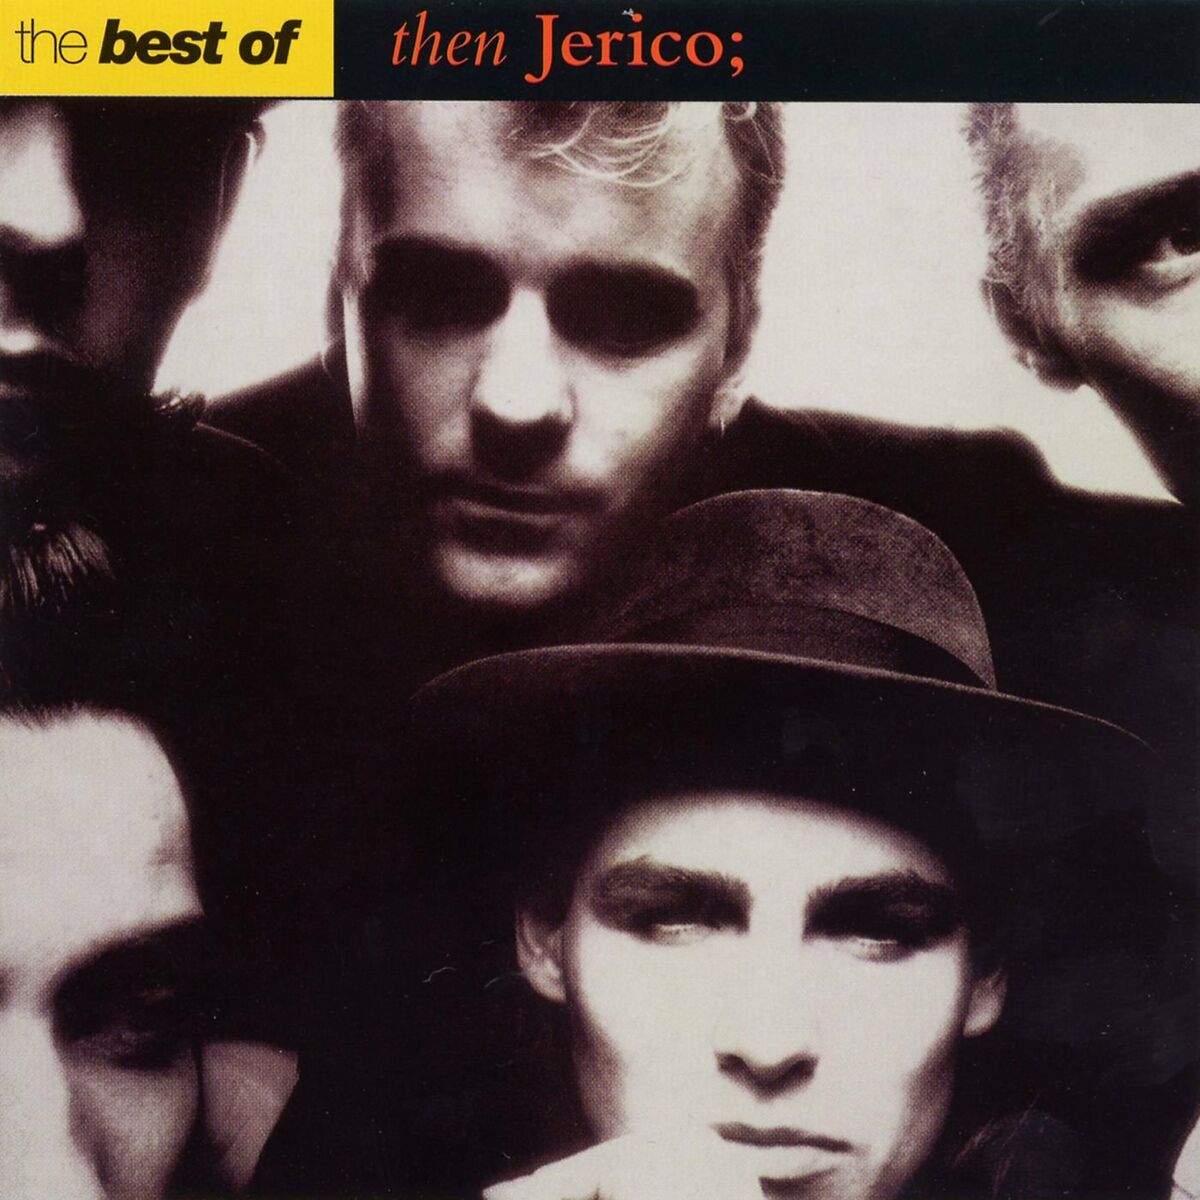 Then Jerico: albums, songs, playlists | Listen on Deezer